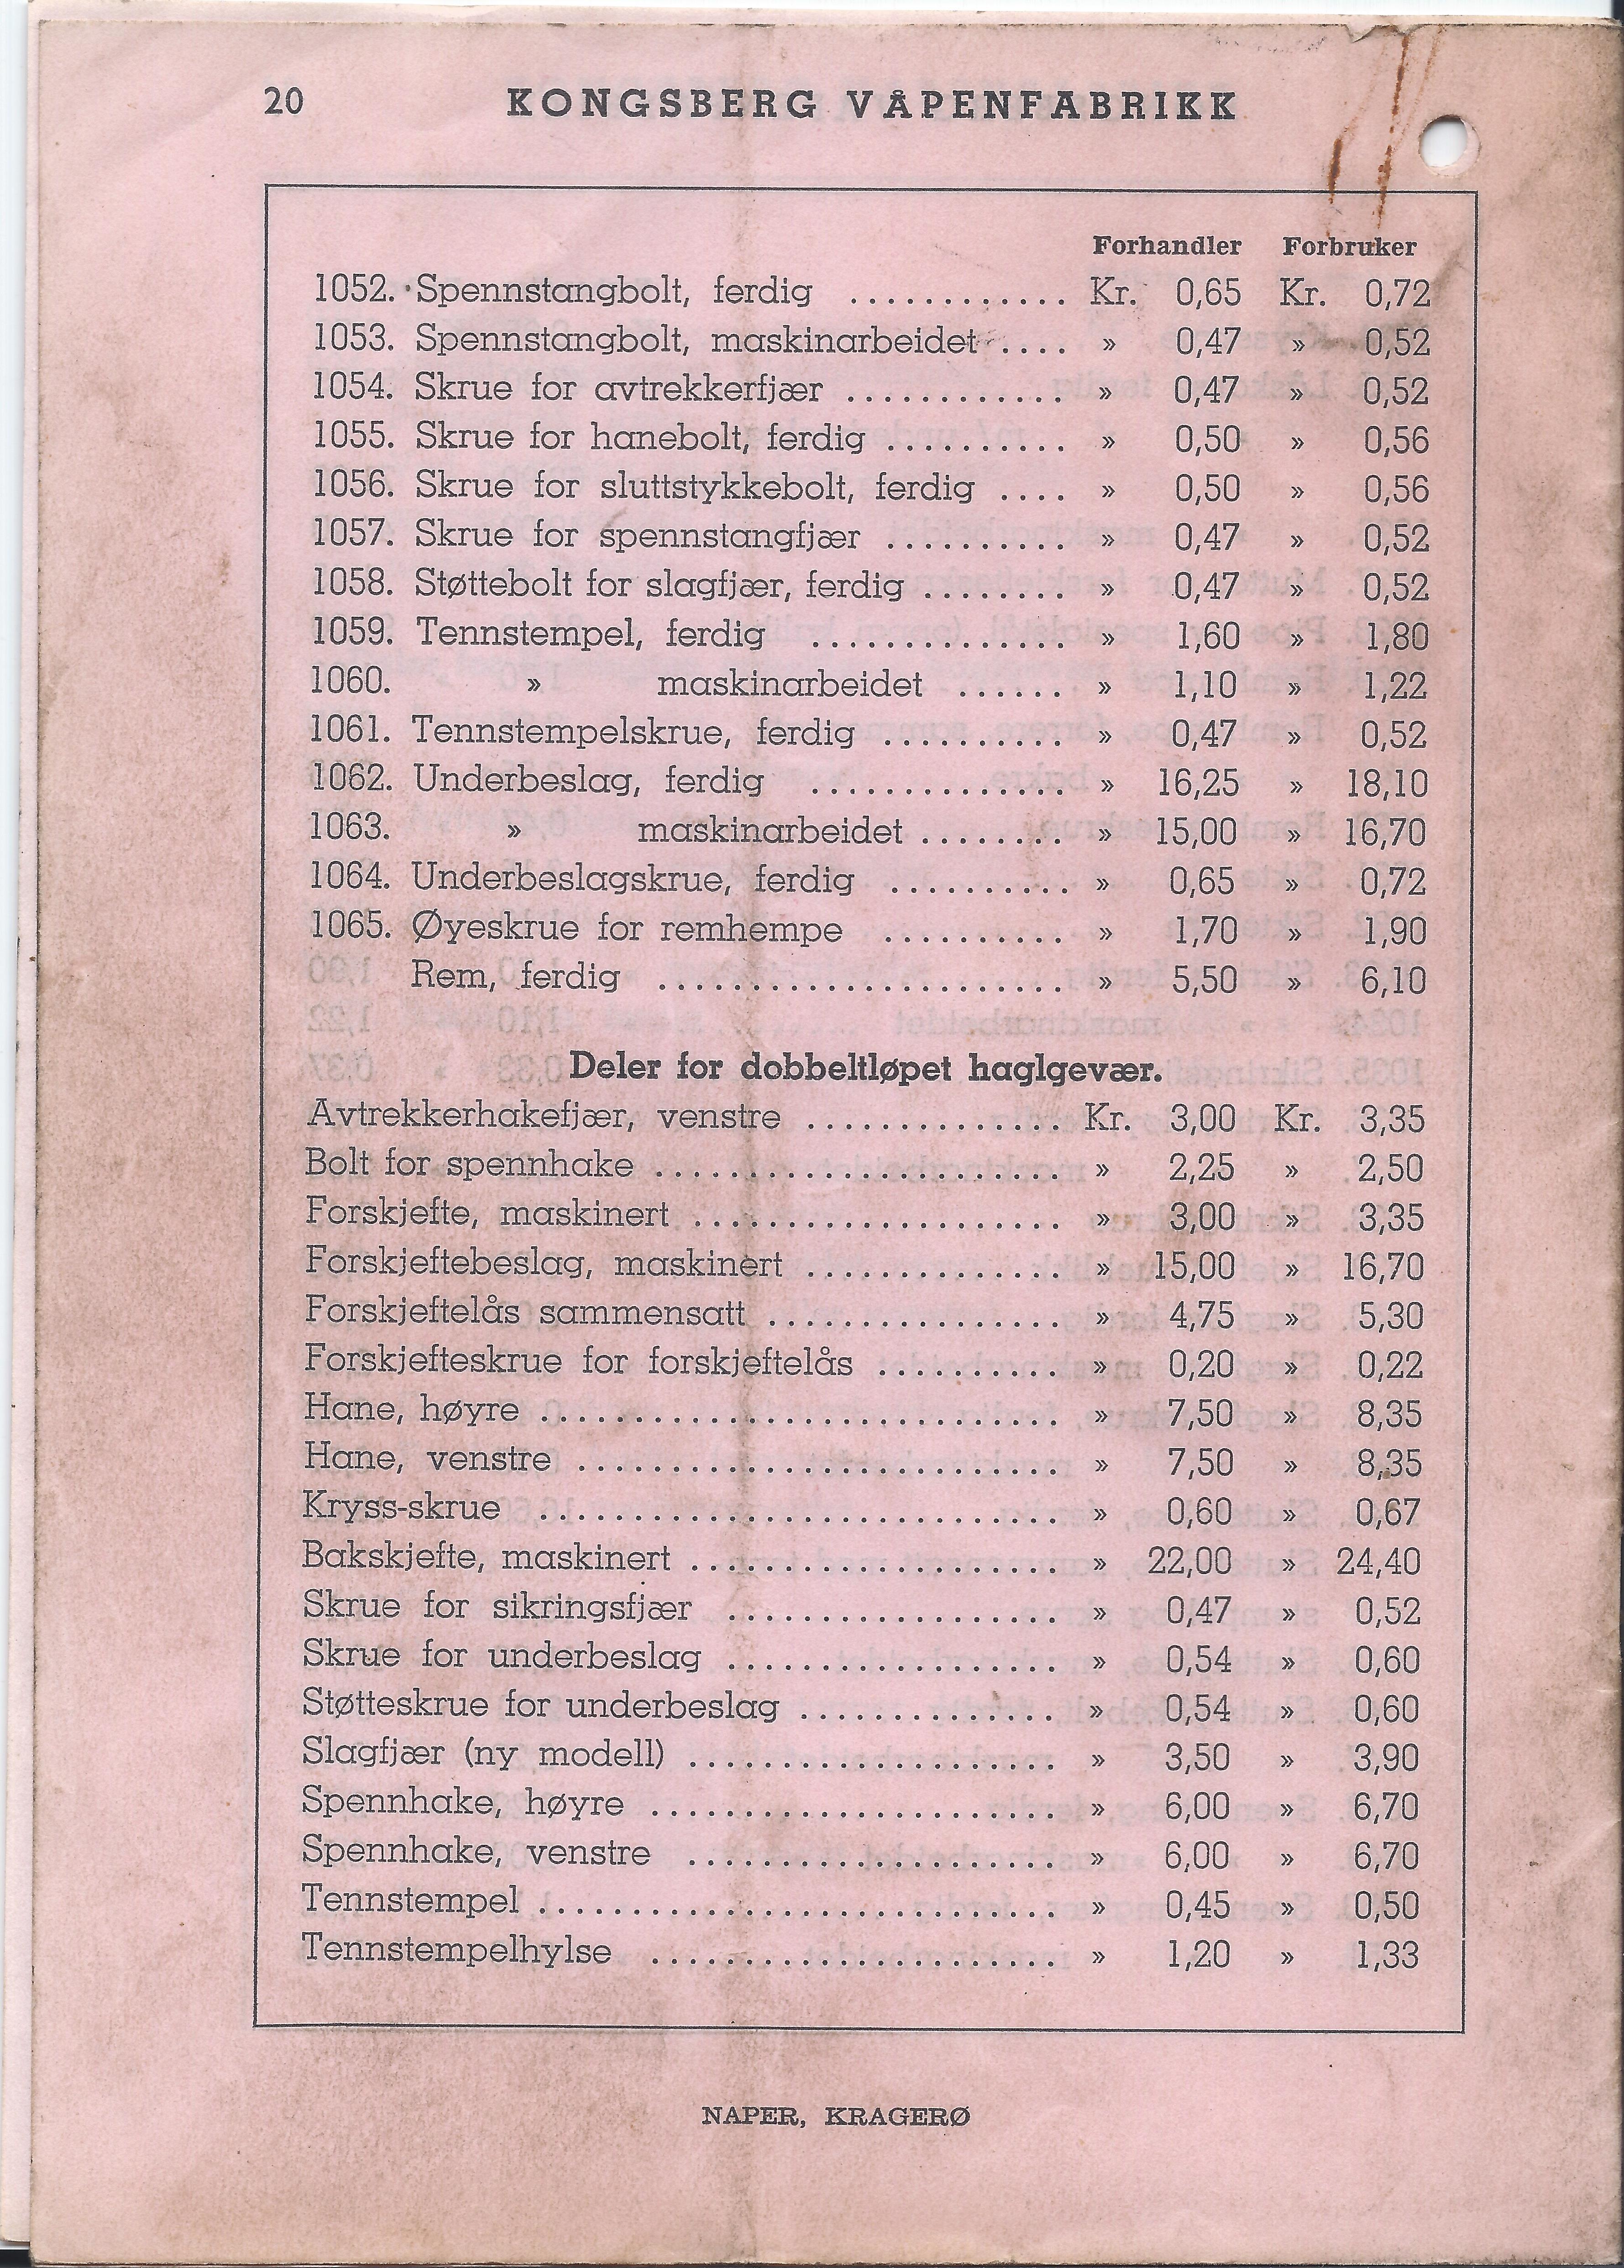 ./doc/KV/KV-Prisliste-Deler-Nr16-Juni-1951-10.jpg